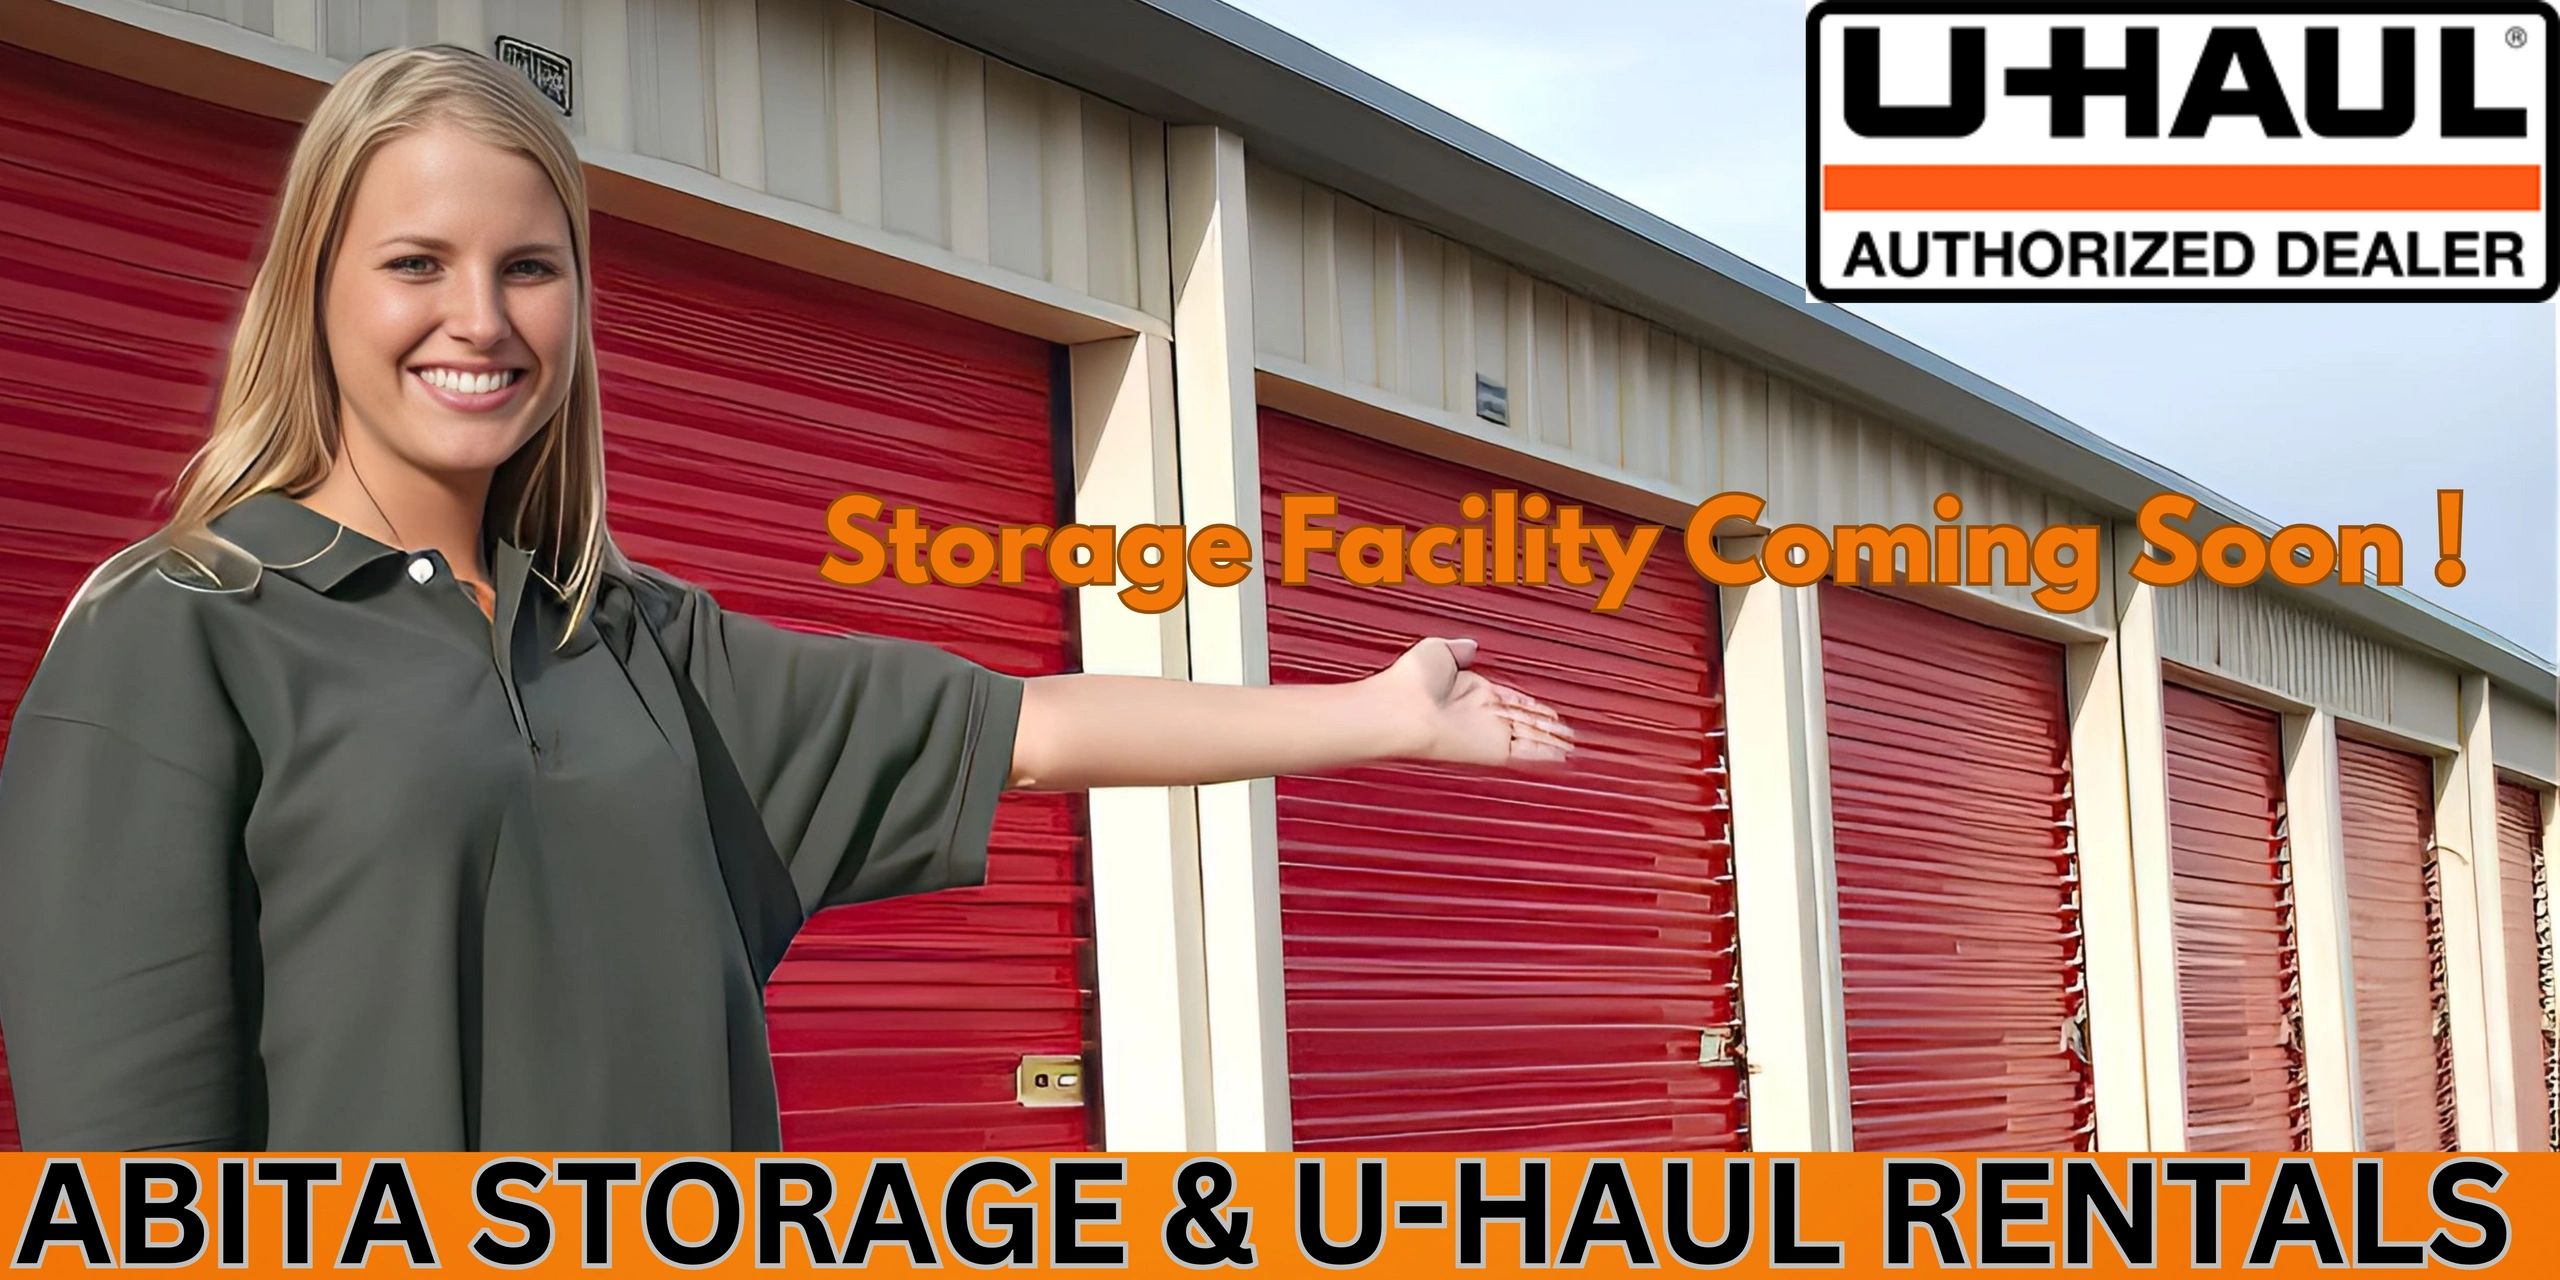 Abita Storage & U-haul Rentals